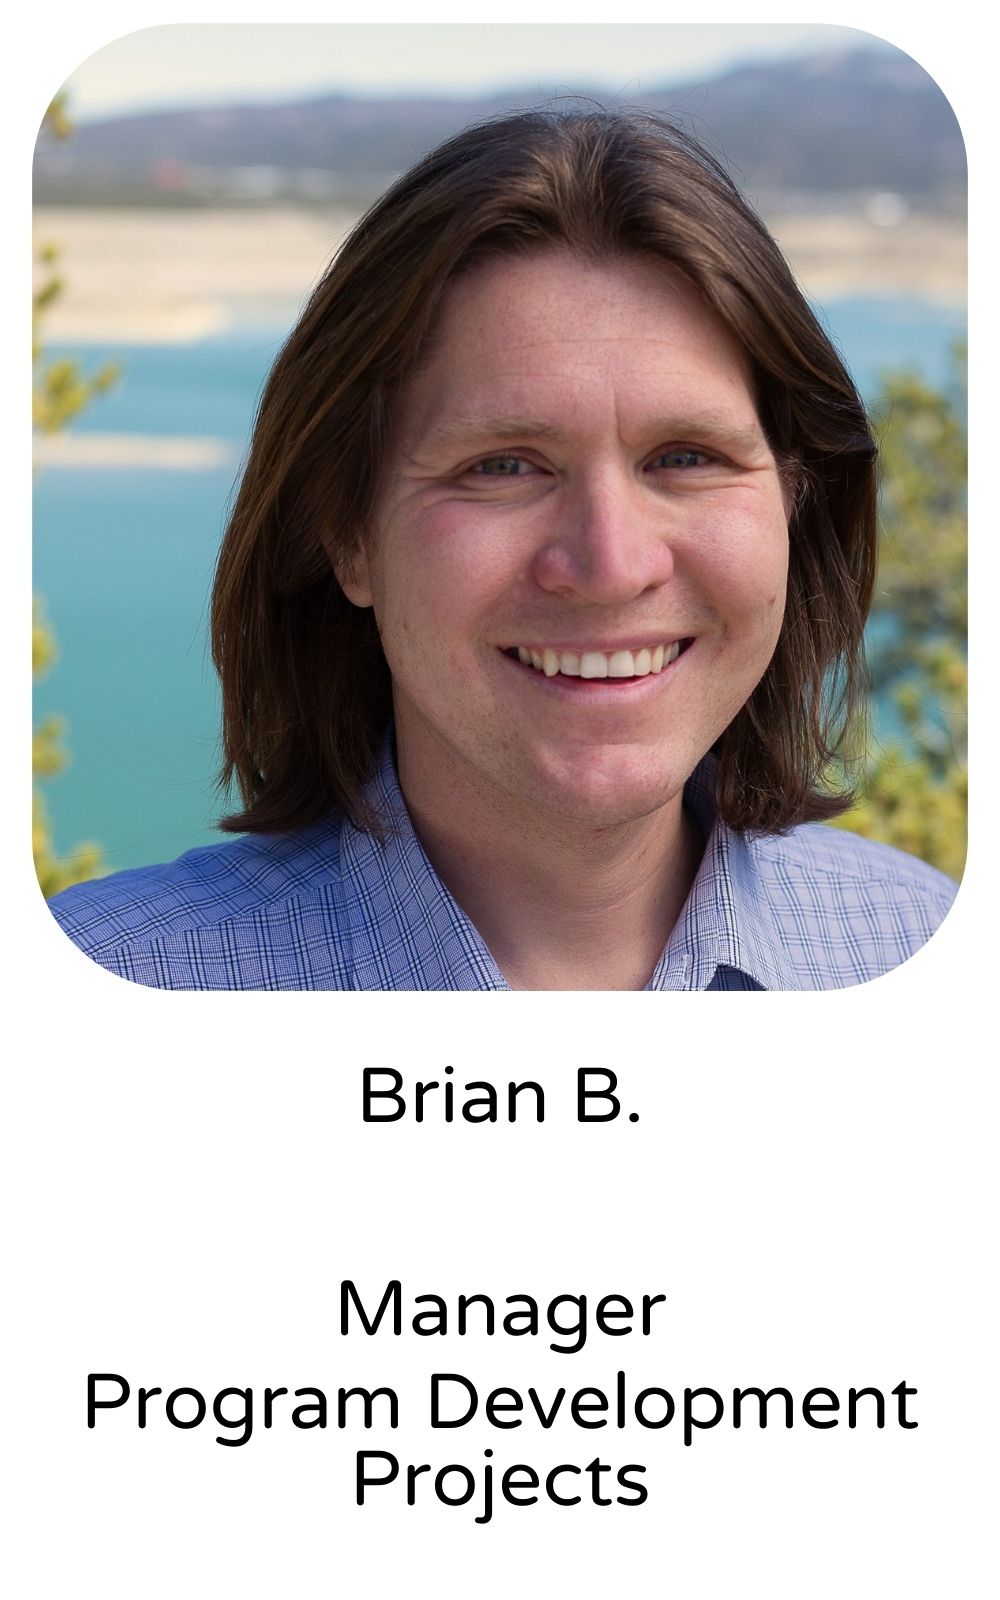 Brian B, Manager, Program Development Projects